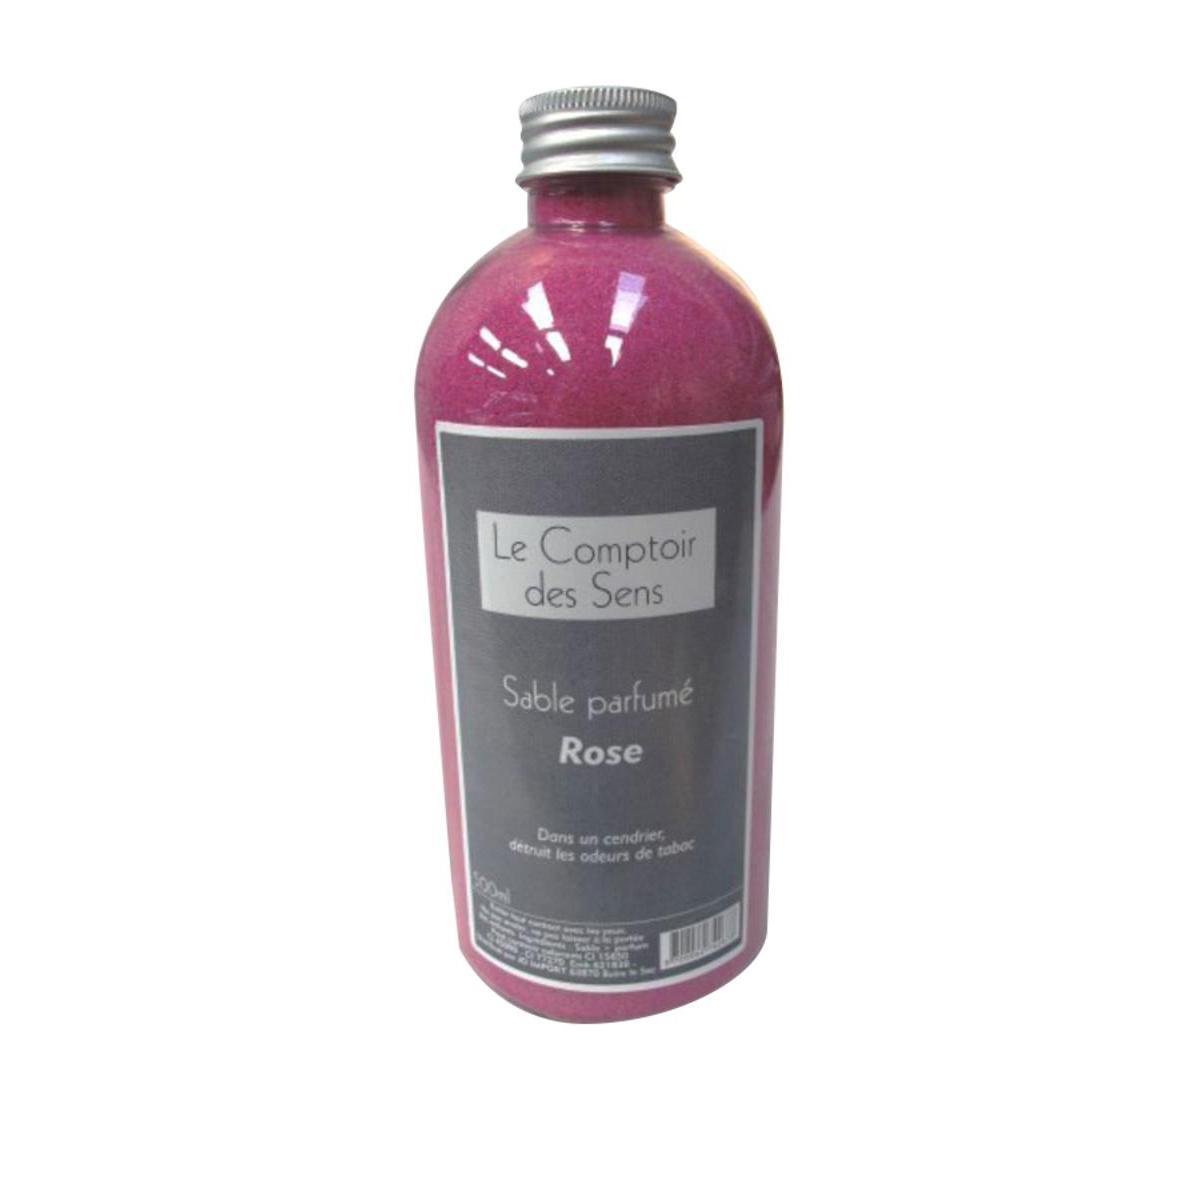 Sable parfum rose - D 7 x 17 cm - 500 ml - Rose